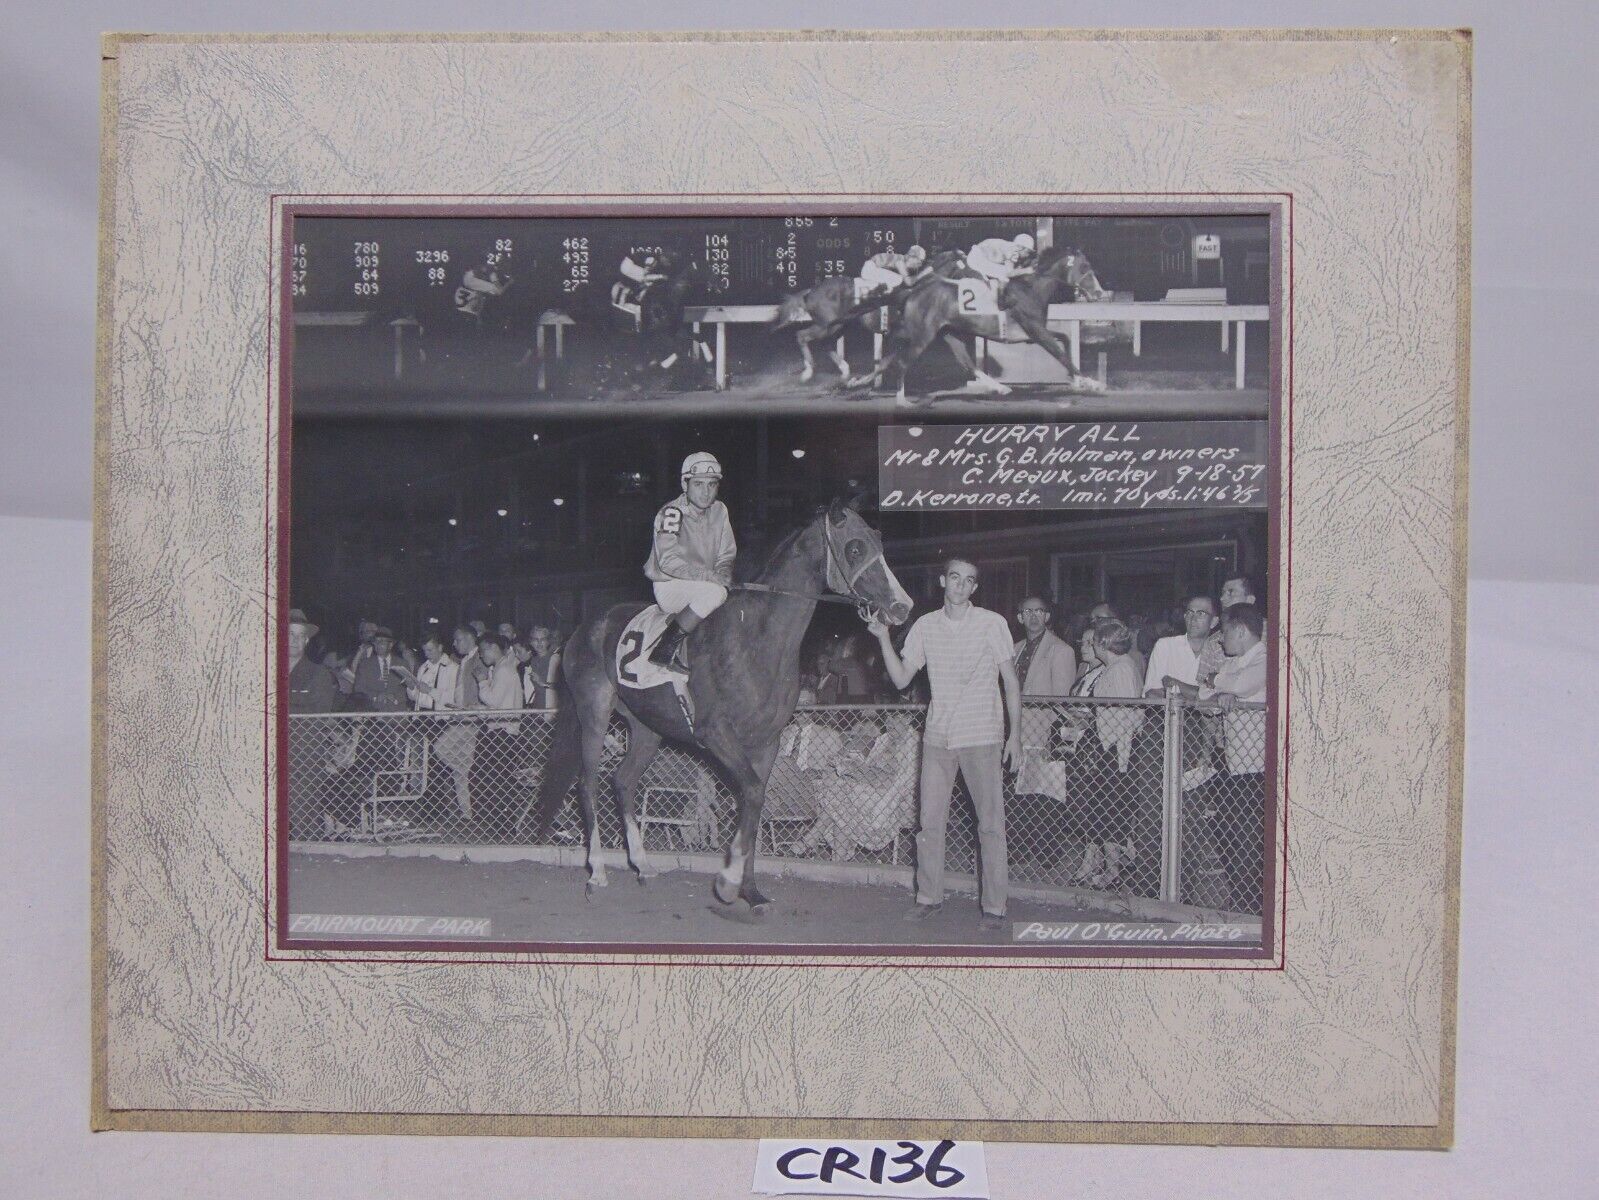 9-18-1957 PRESS PHOTO JOCKEYS ON HORSES RACE AT FAIRMOUNT PARK HURRY ALL-MEAUX 